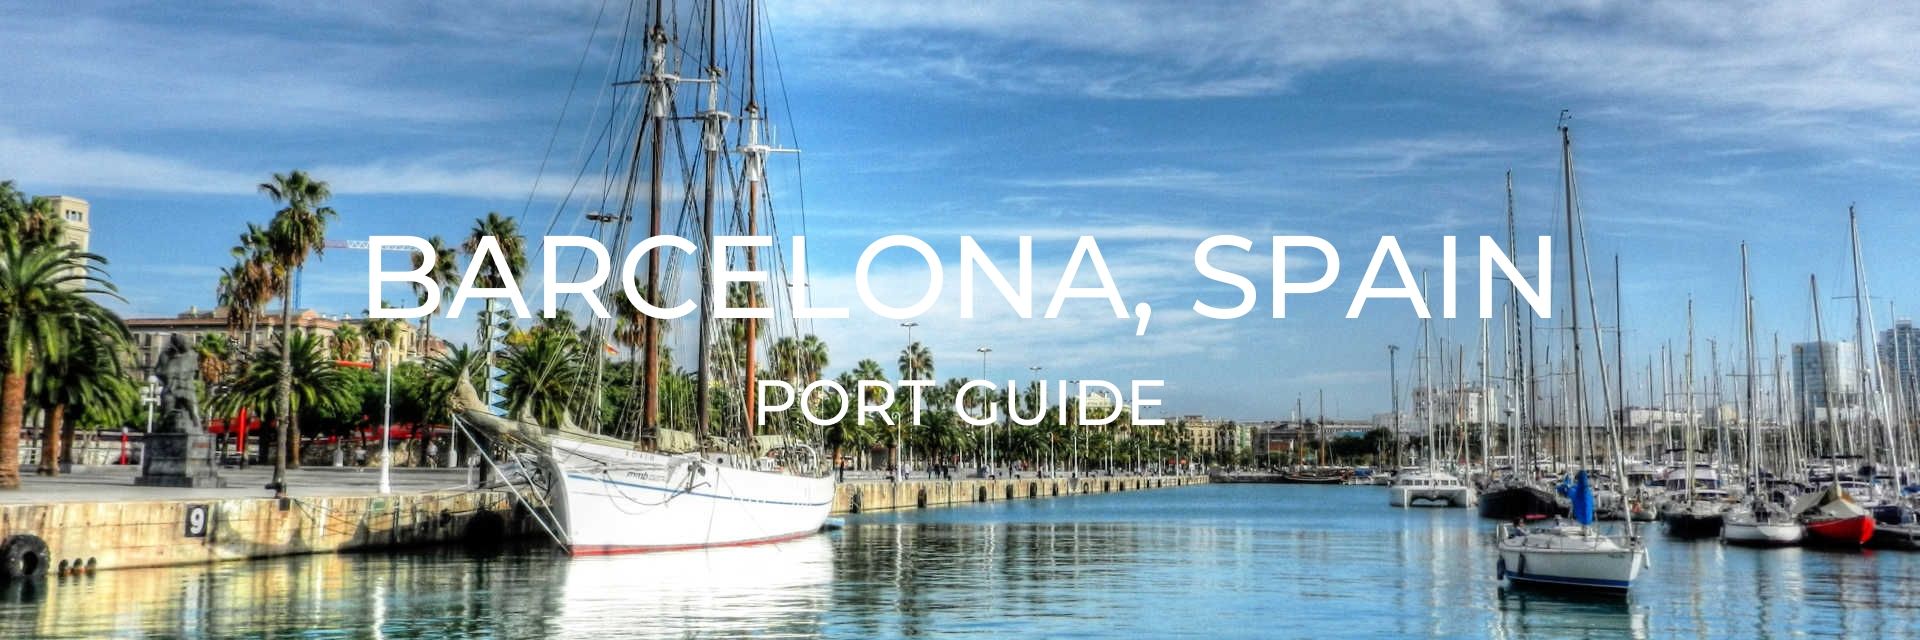 address of barcelona cruise port